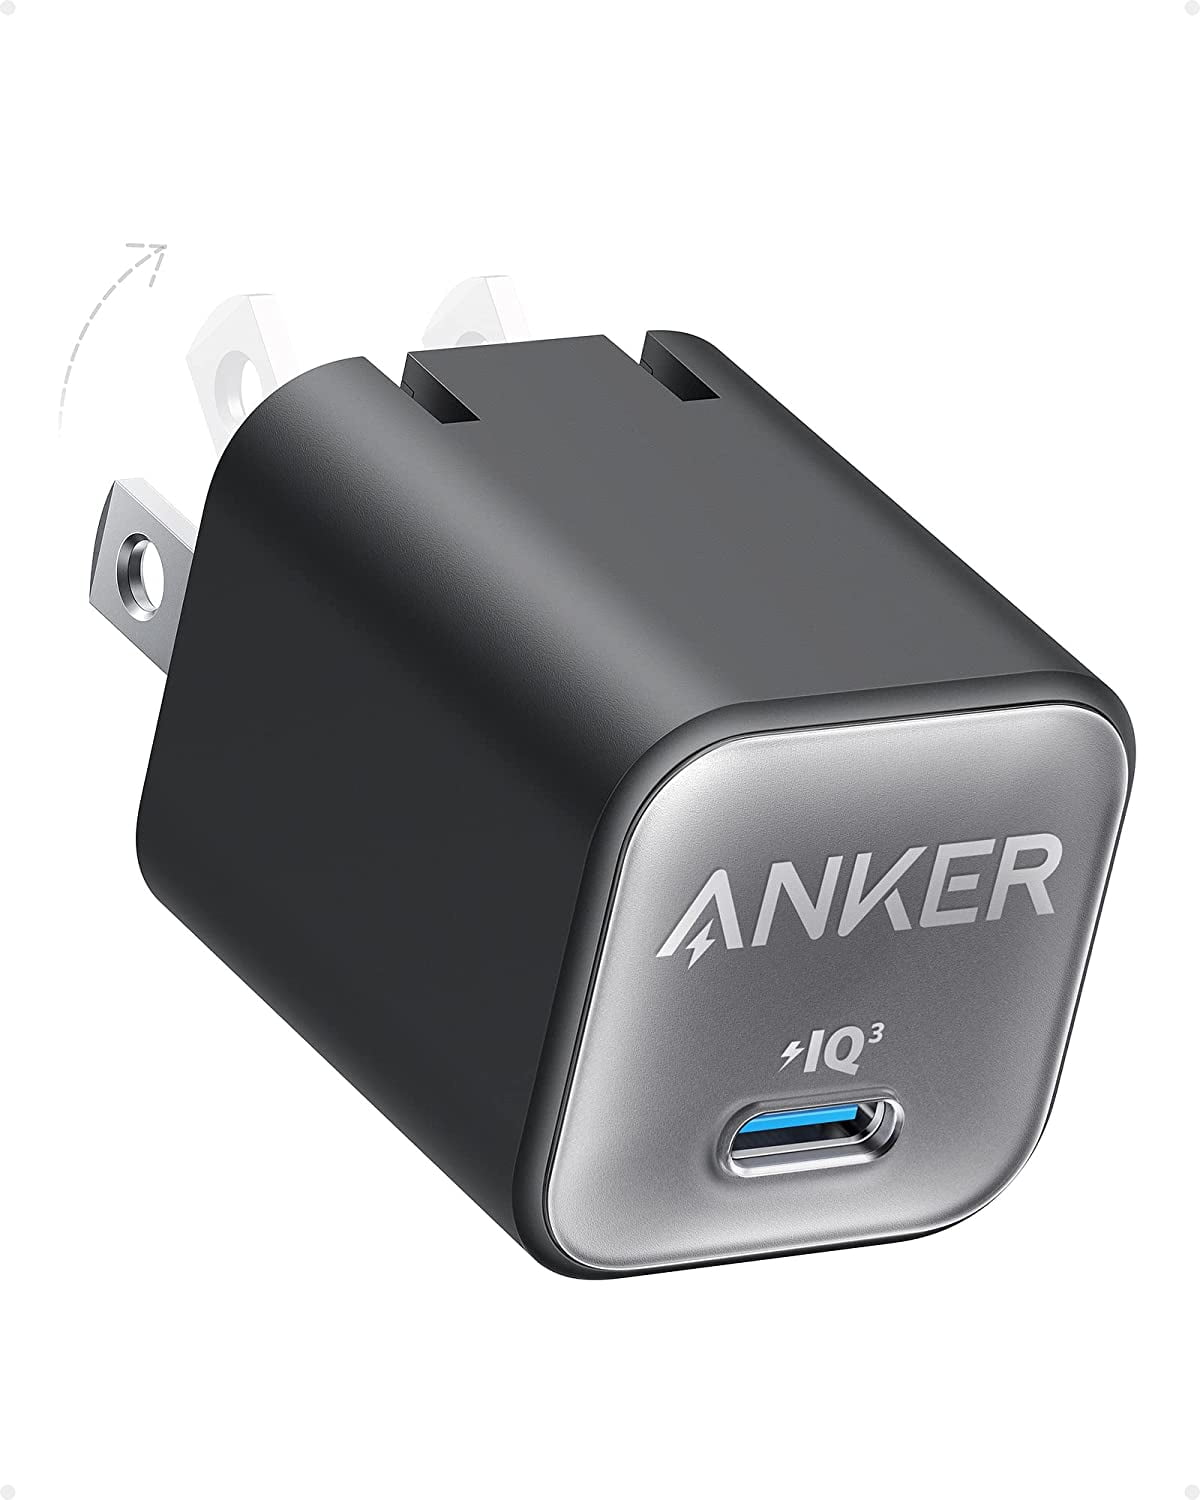 Anker USB C GaN Charger 30W Adapter Nano 3 PIQ 3.0 Fast Charging Foldable  ,Phantom Black 